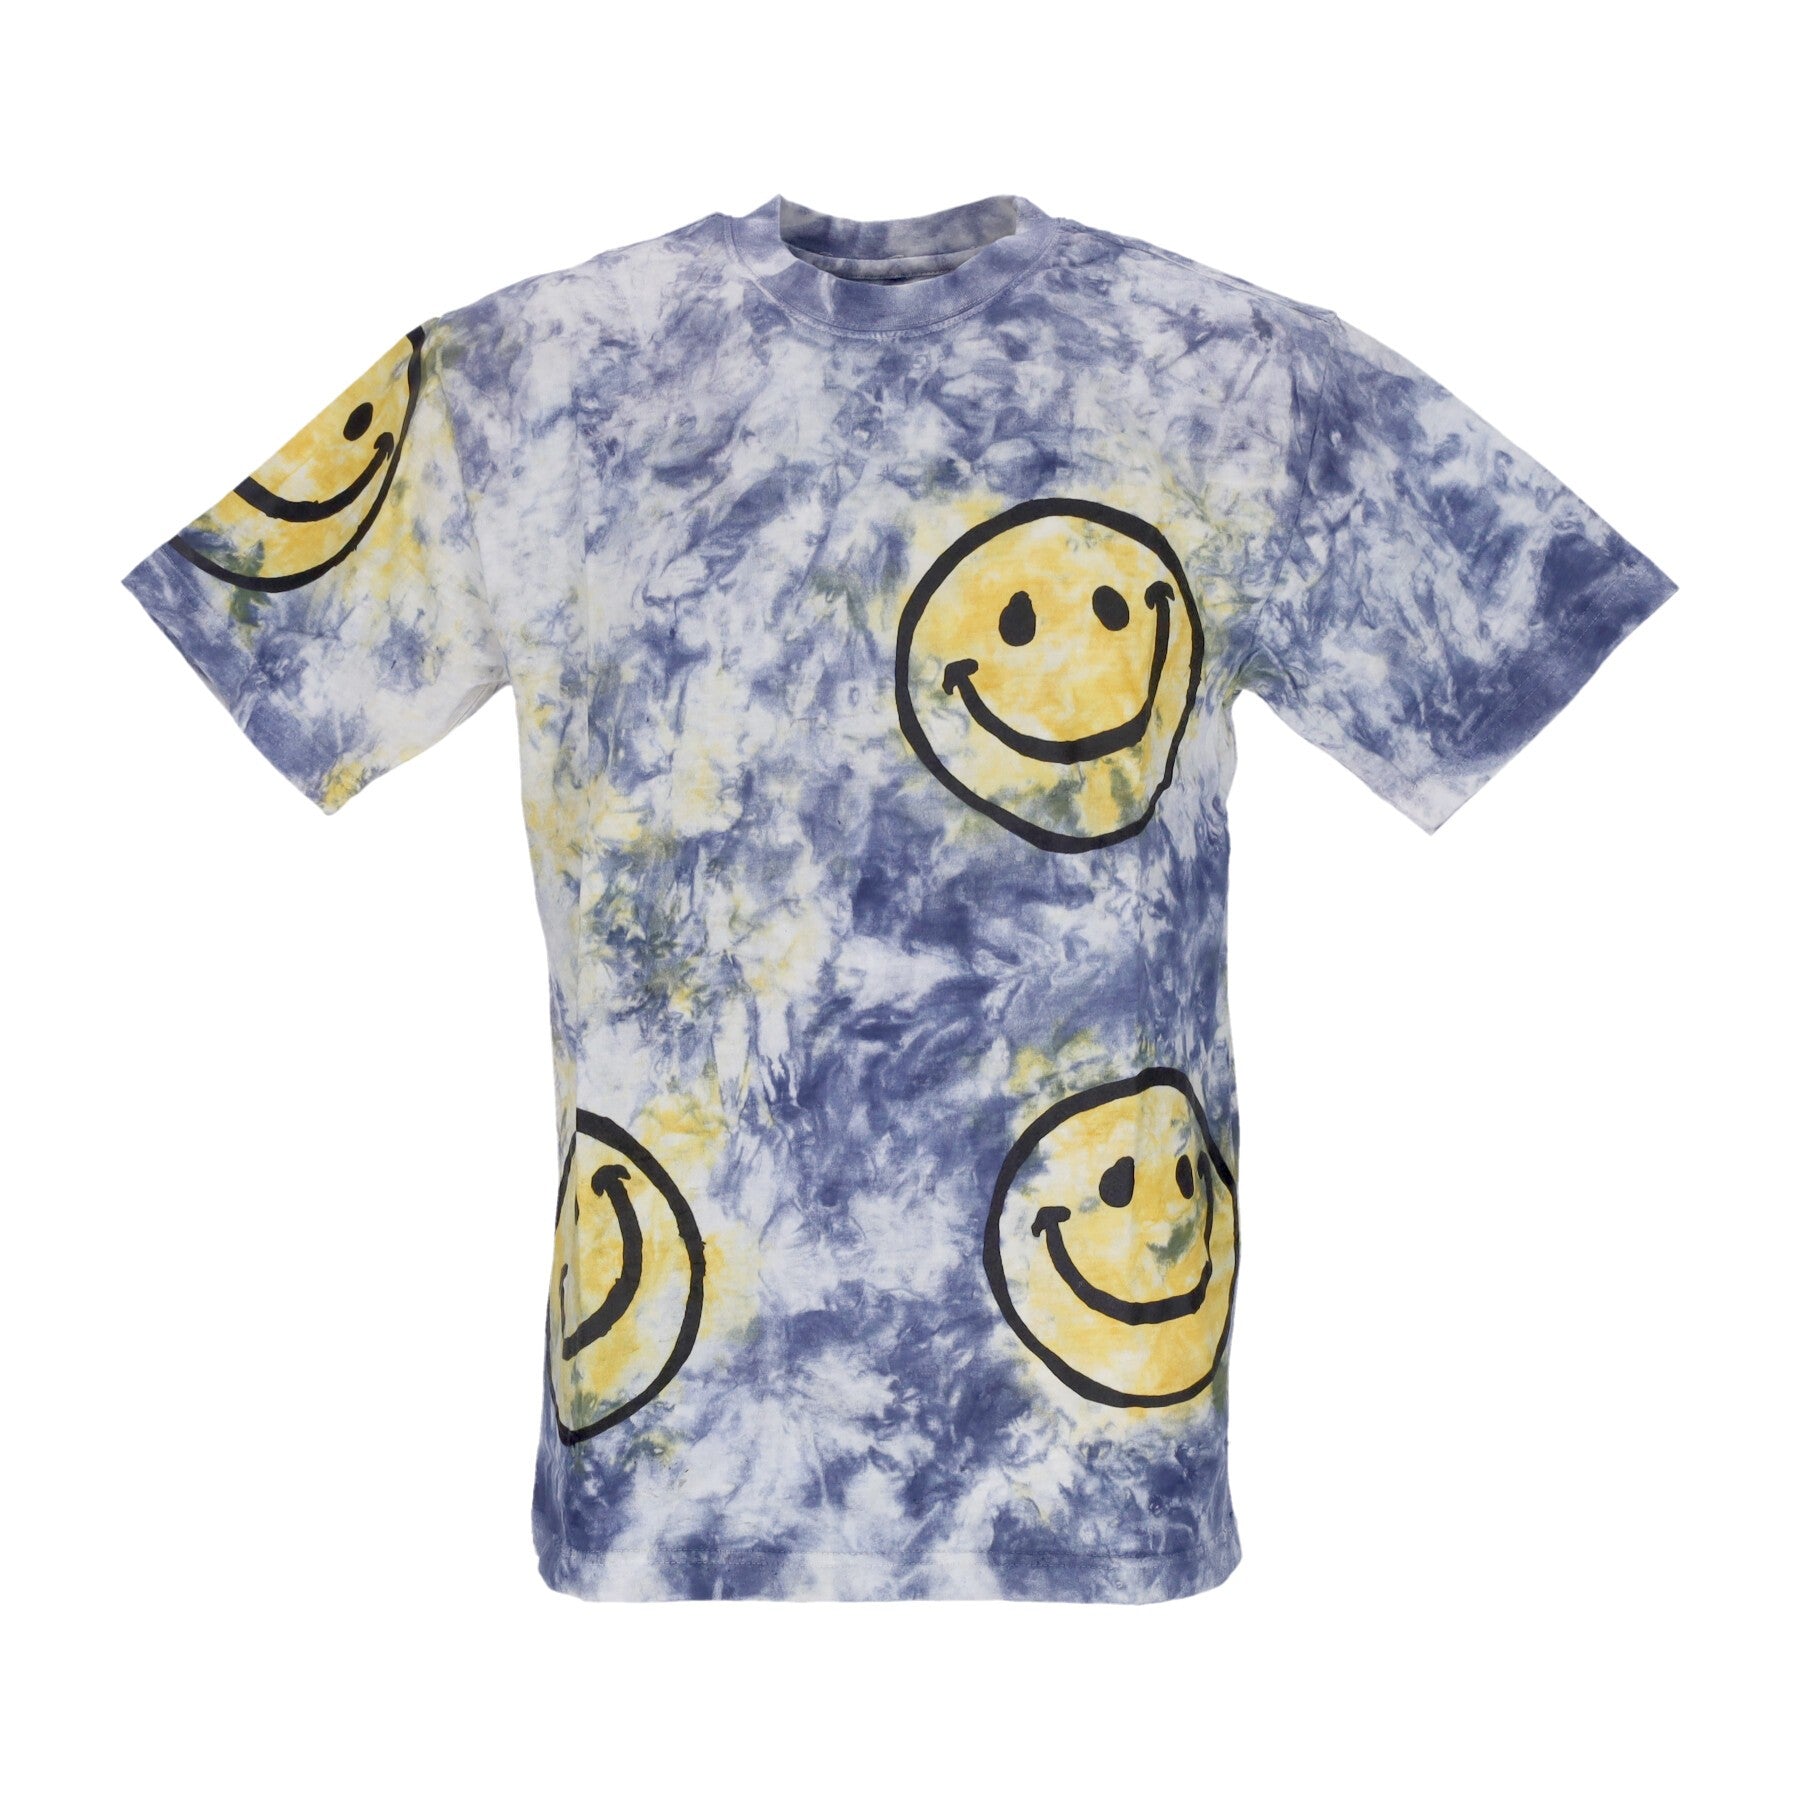 Market, Maglietta Uomo Sun Dye Tee X Smiley, Yellow/blue Tie Dye